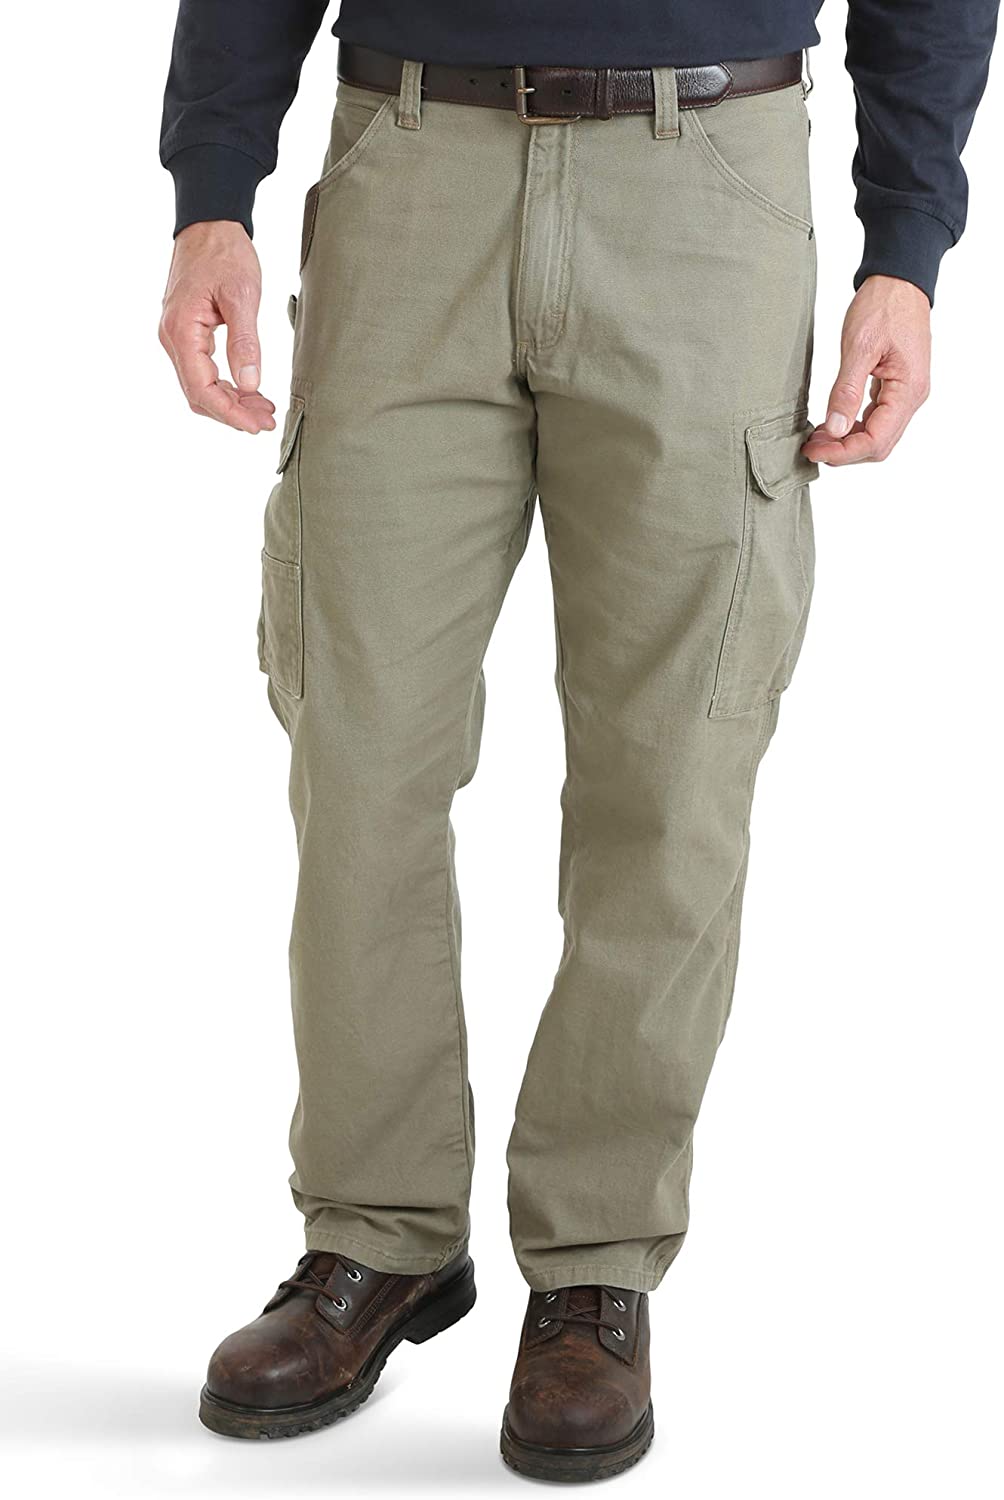 Wrangler Riggs Workwear Men's Advanced Comfort Lightweight Ranger Pant |  eBay